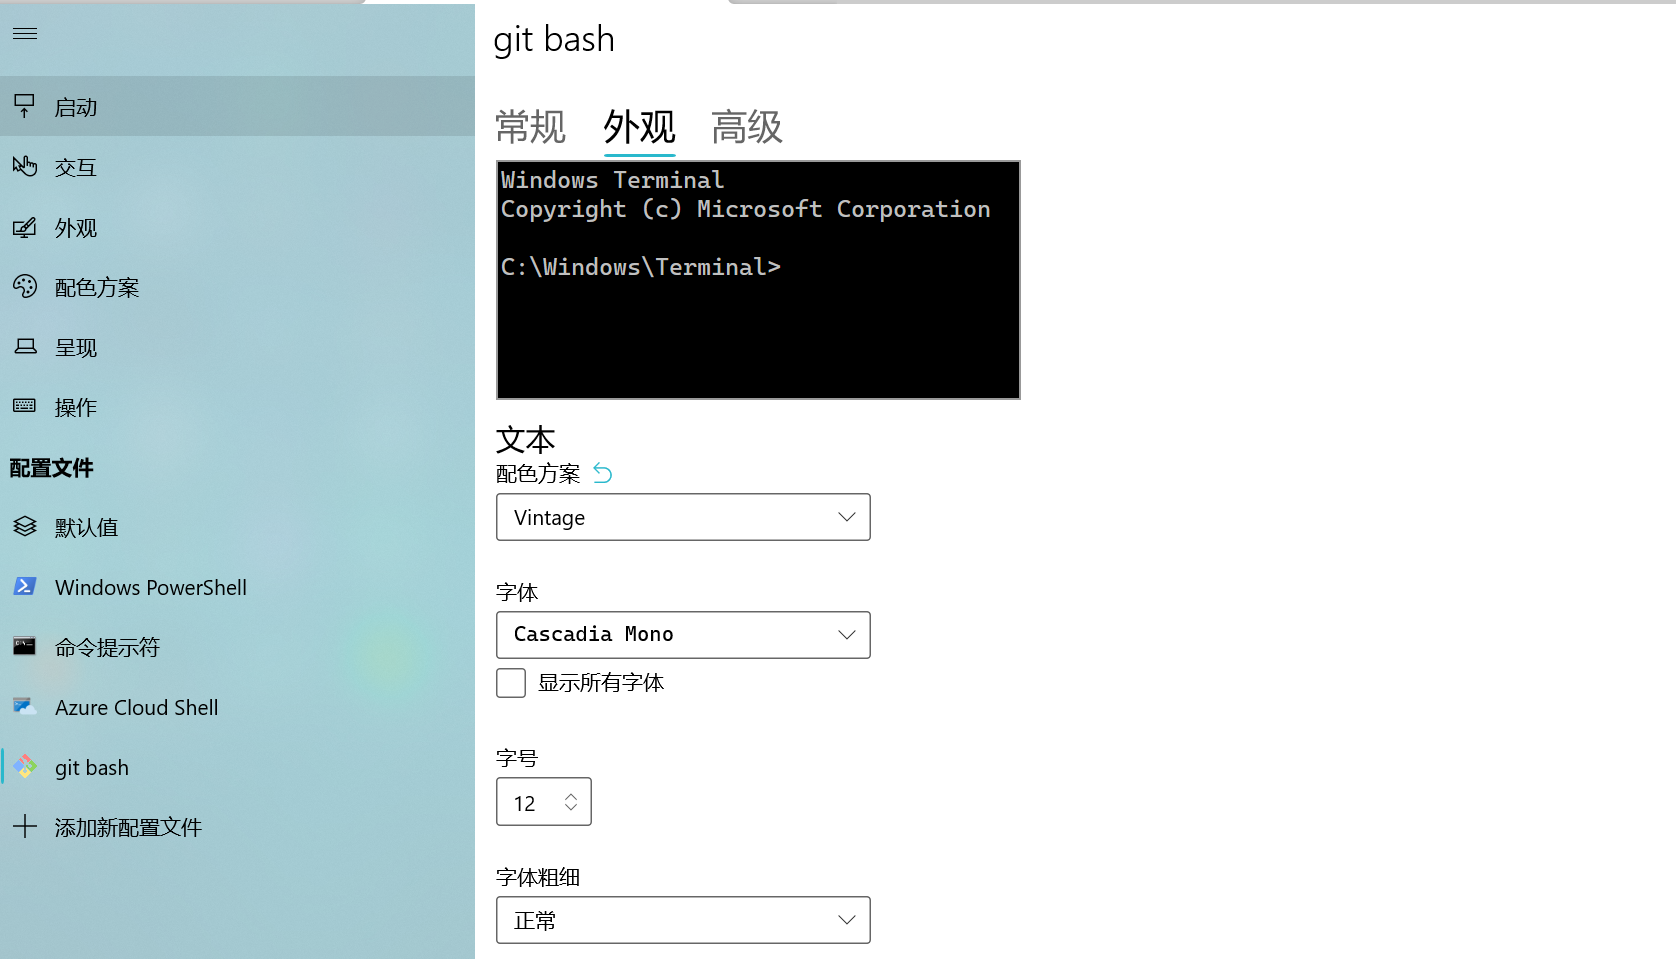 [LINUX] 在 Win10 上搭建好用的终端开发环境：windows terminal + git bash + zsh + oh-my-zsh